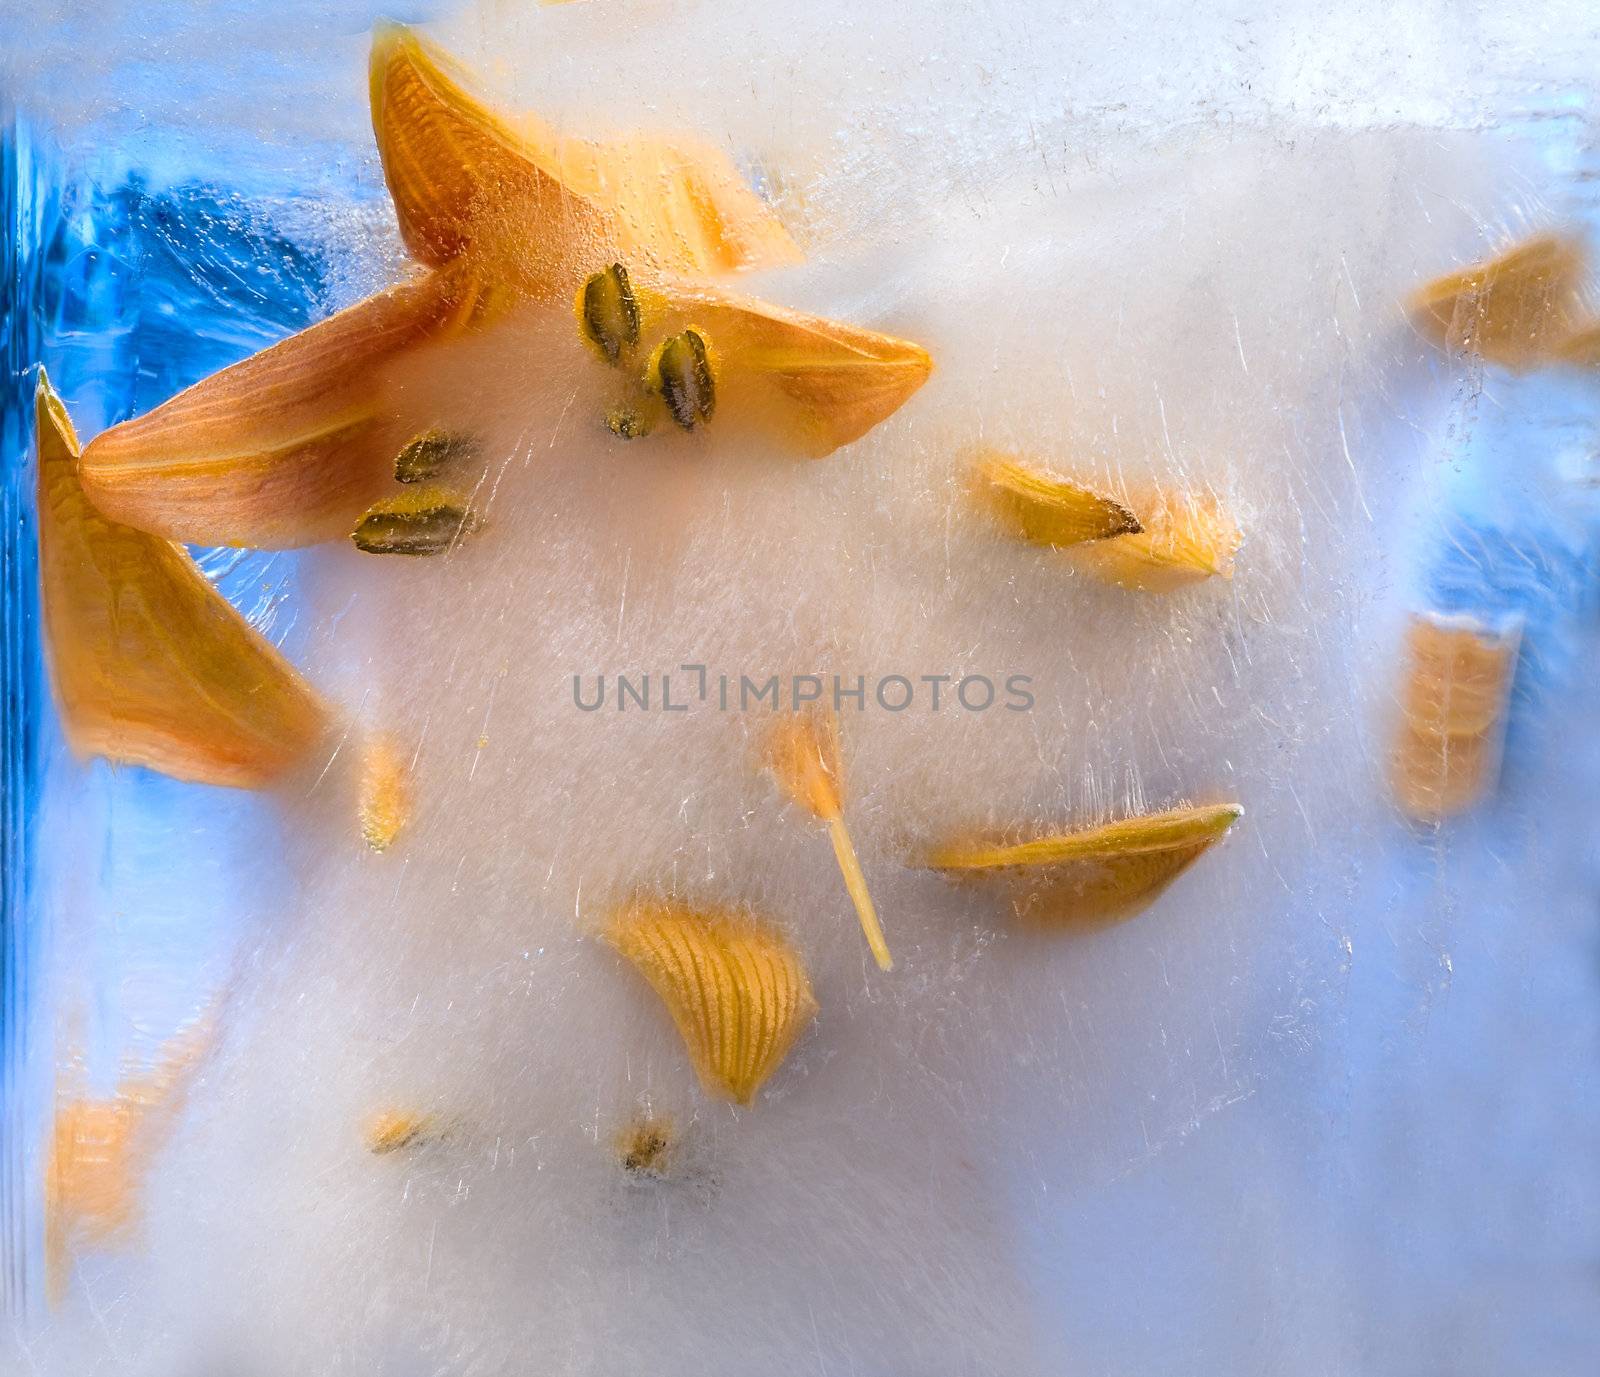  Frozen       Daylily flower  by foryouinf